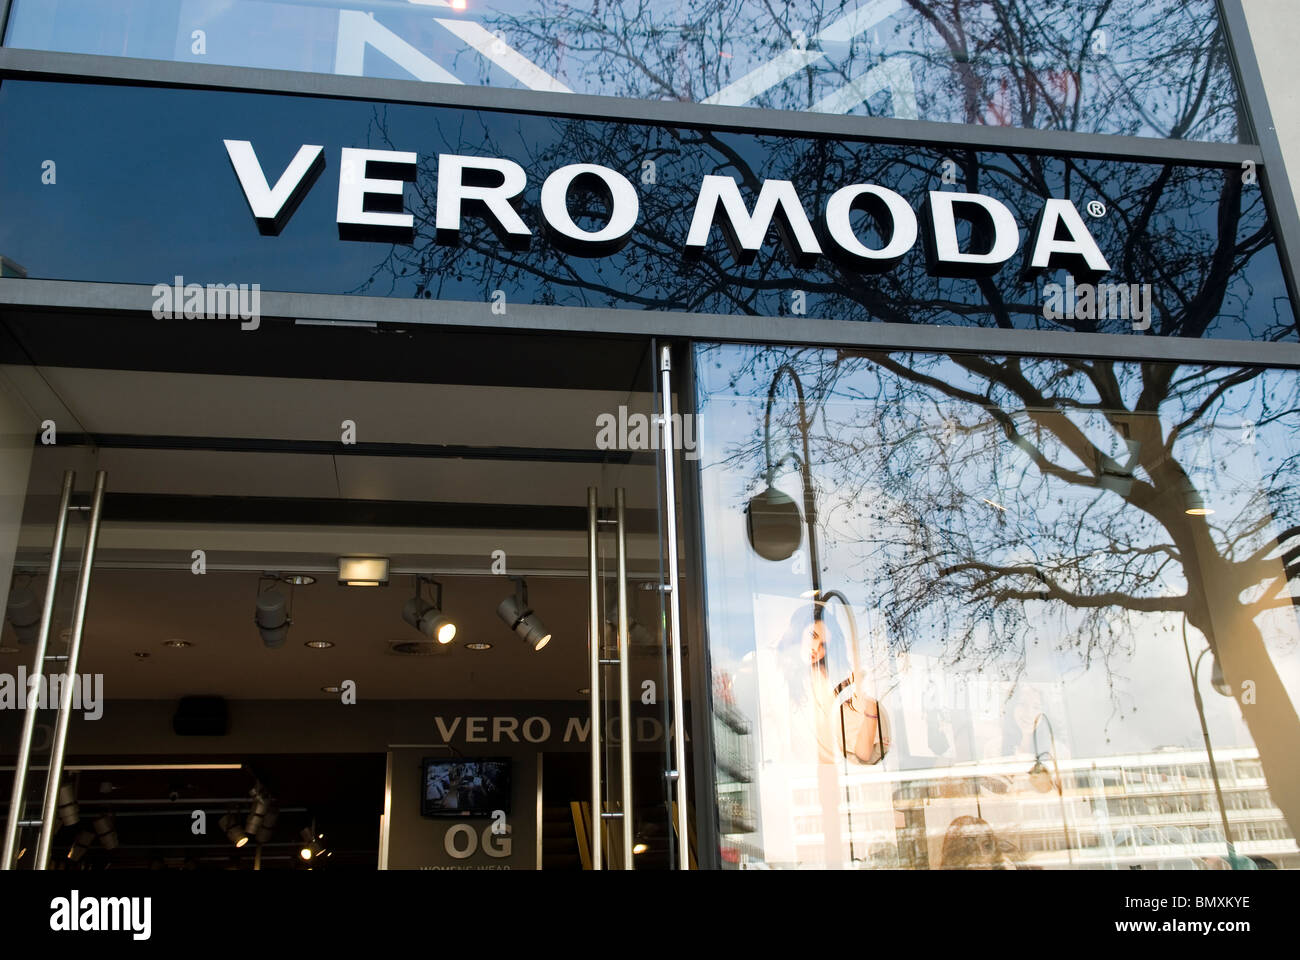 Vero Moda fashion sign Berlin Germany Stock - Alamy